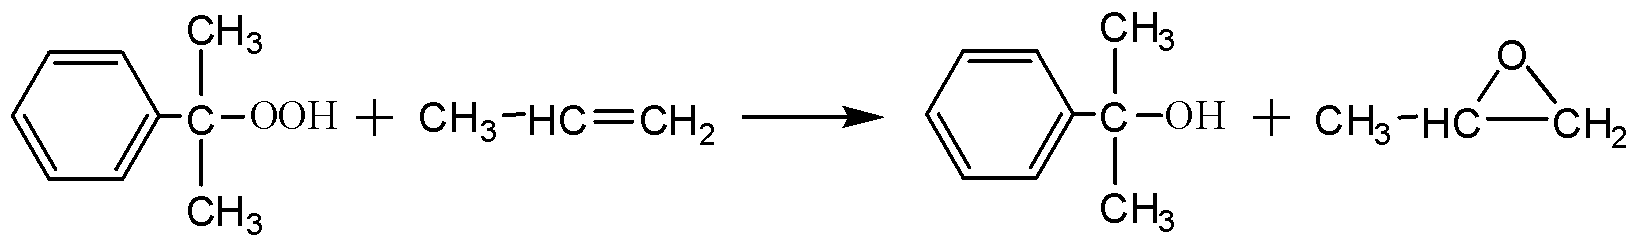 Method for preparing titanium-based catalyst and synthesizing epoxypropane and dicumyl peroxide